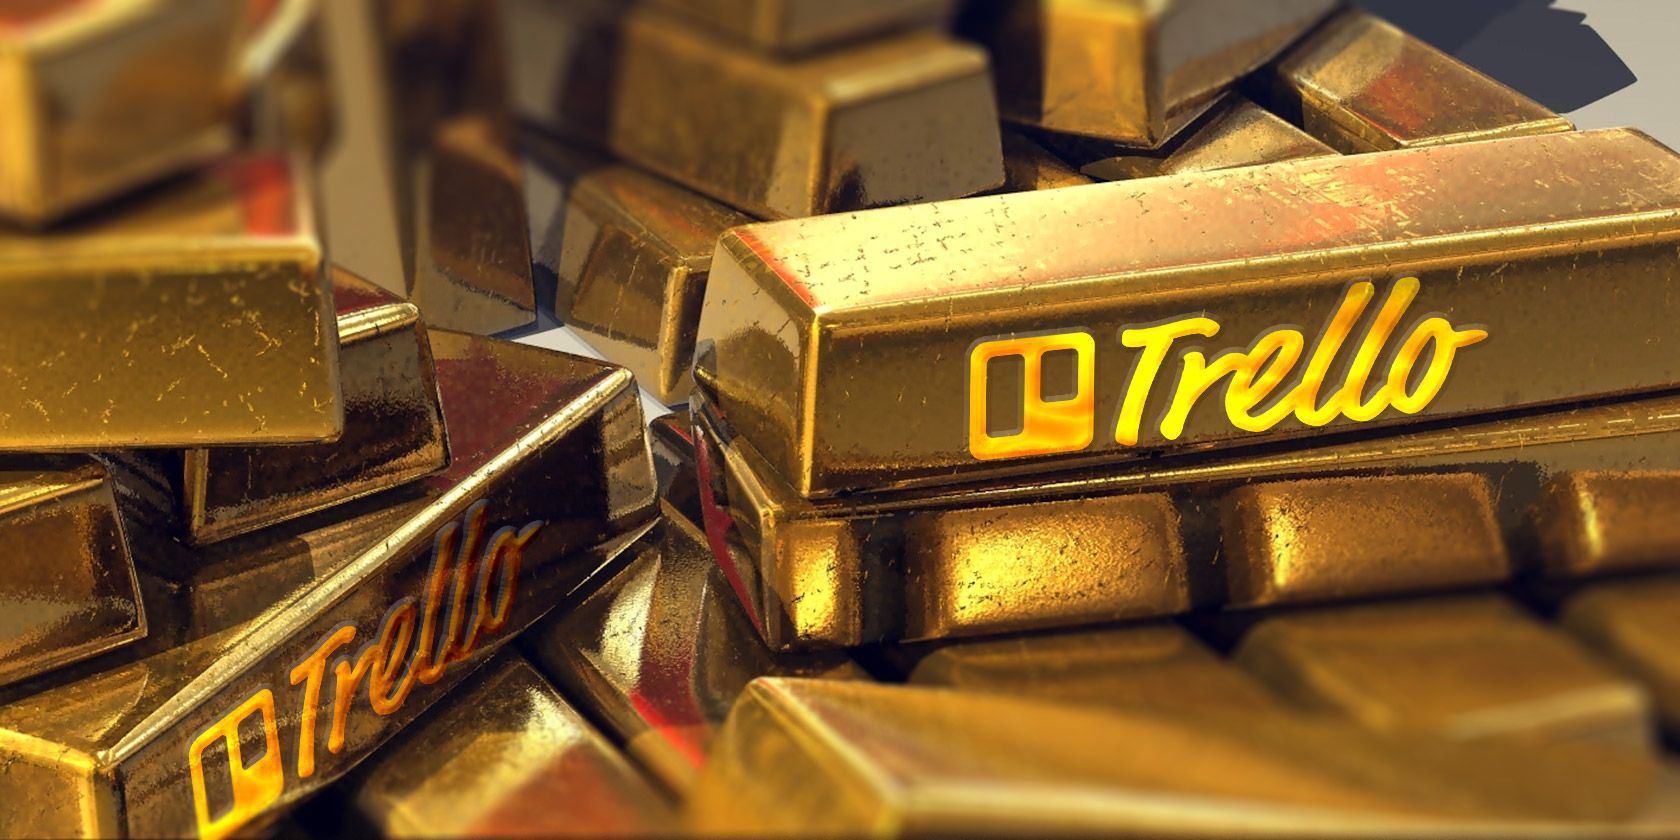 buy trello gold